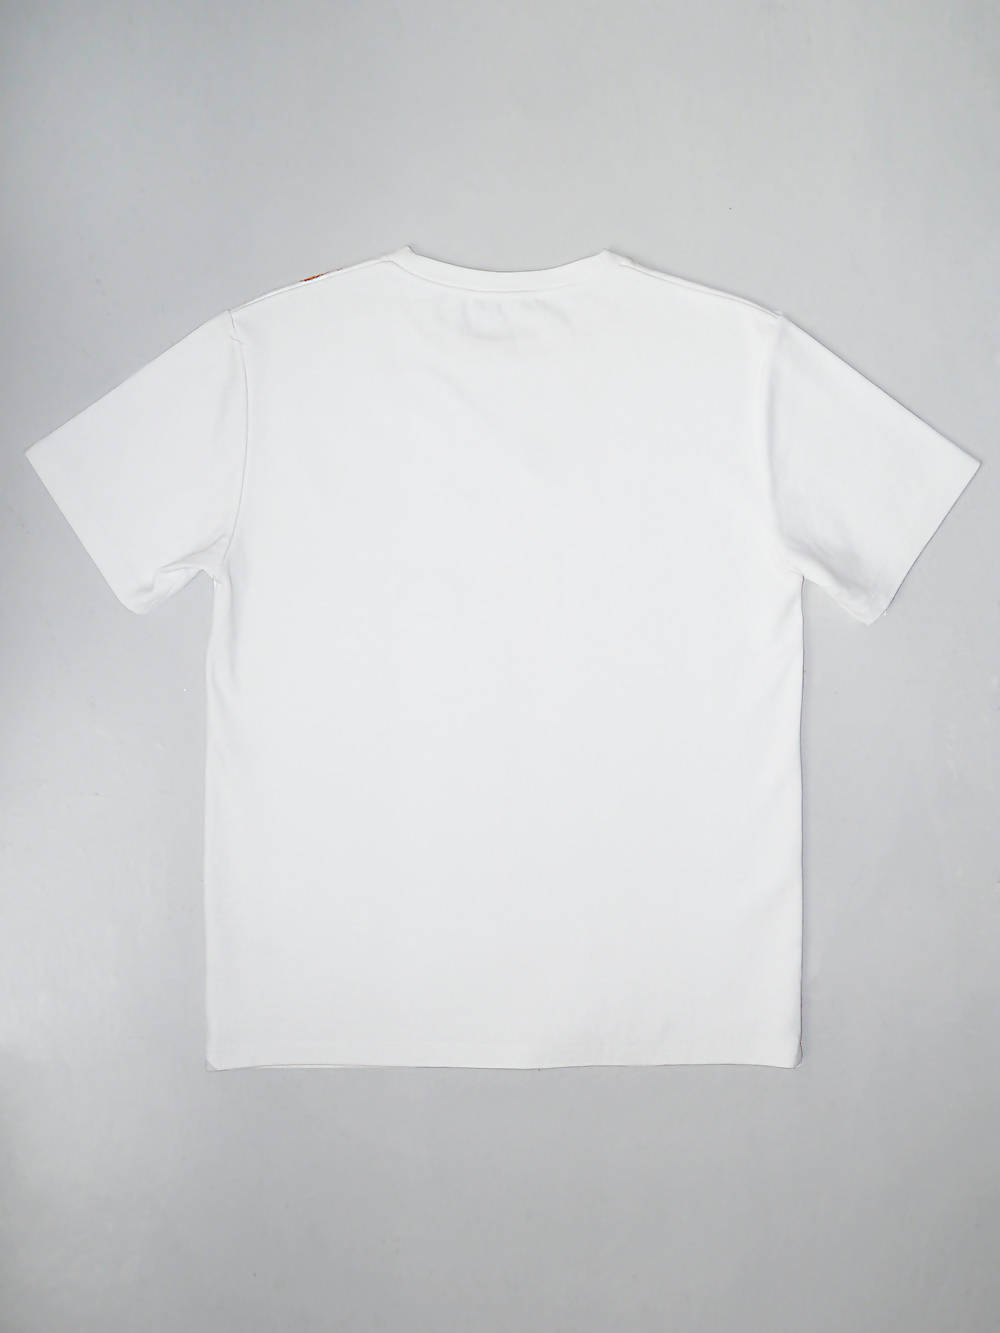 Studio Mend Vintage White Mended Acne T-Shirt